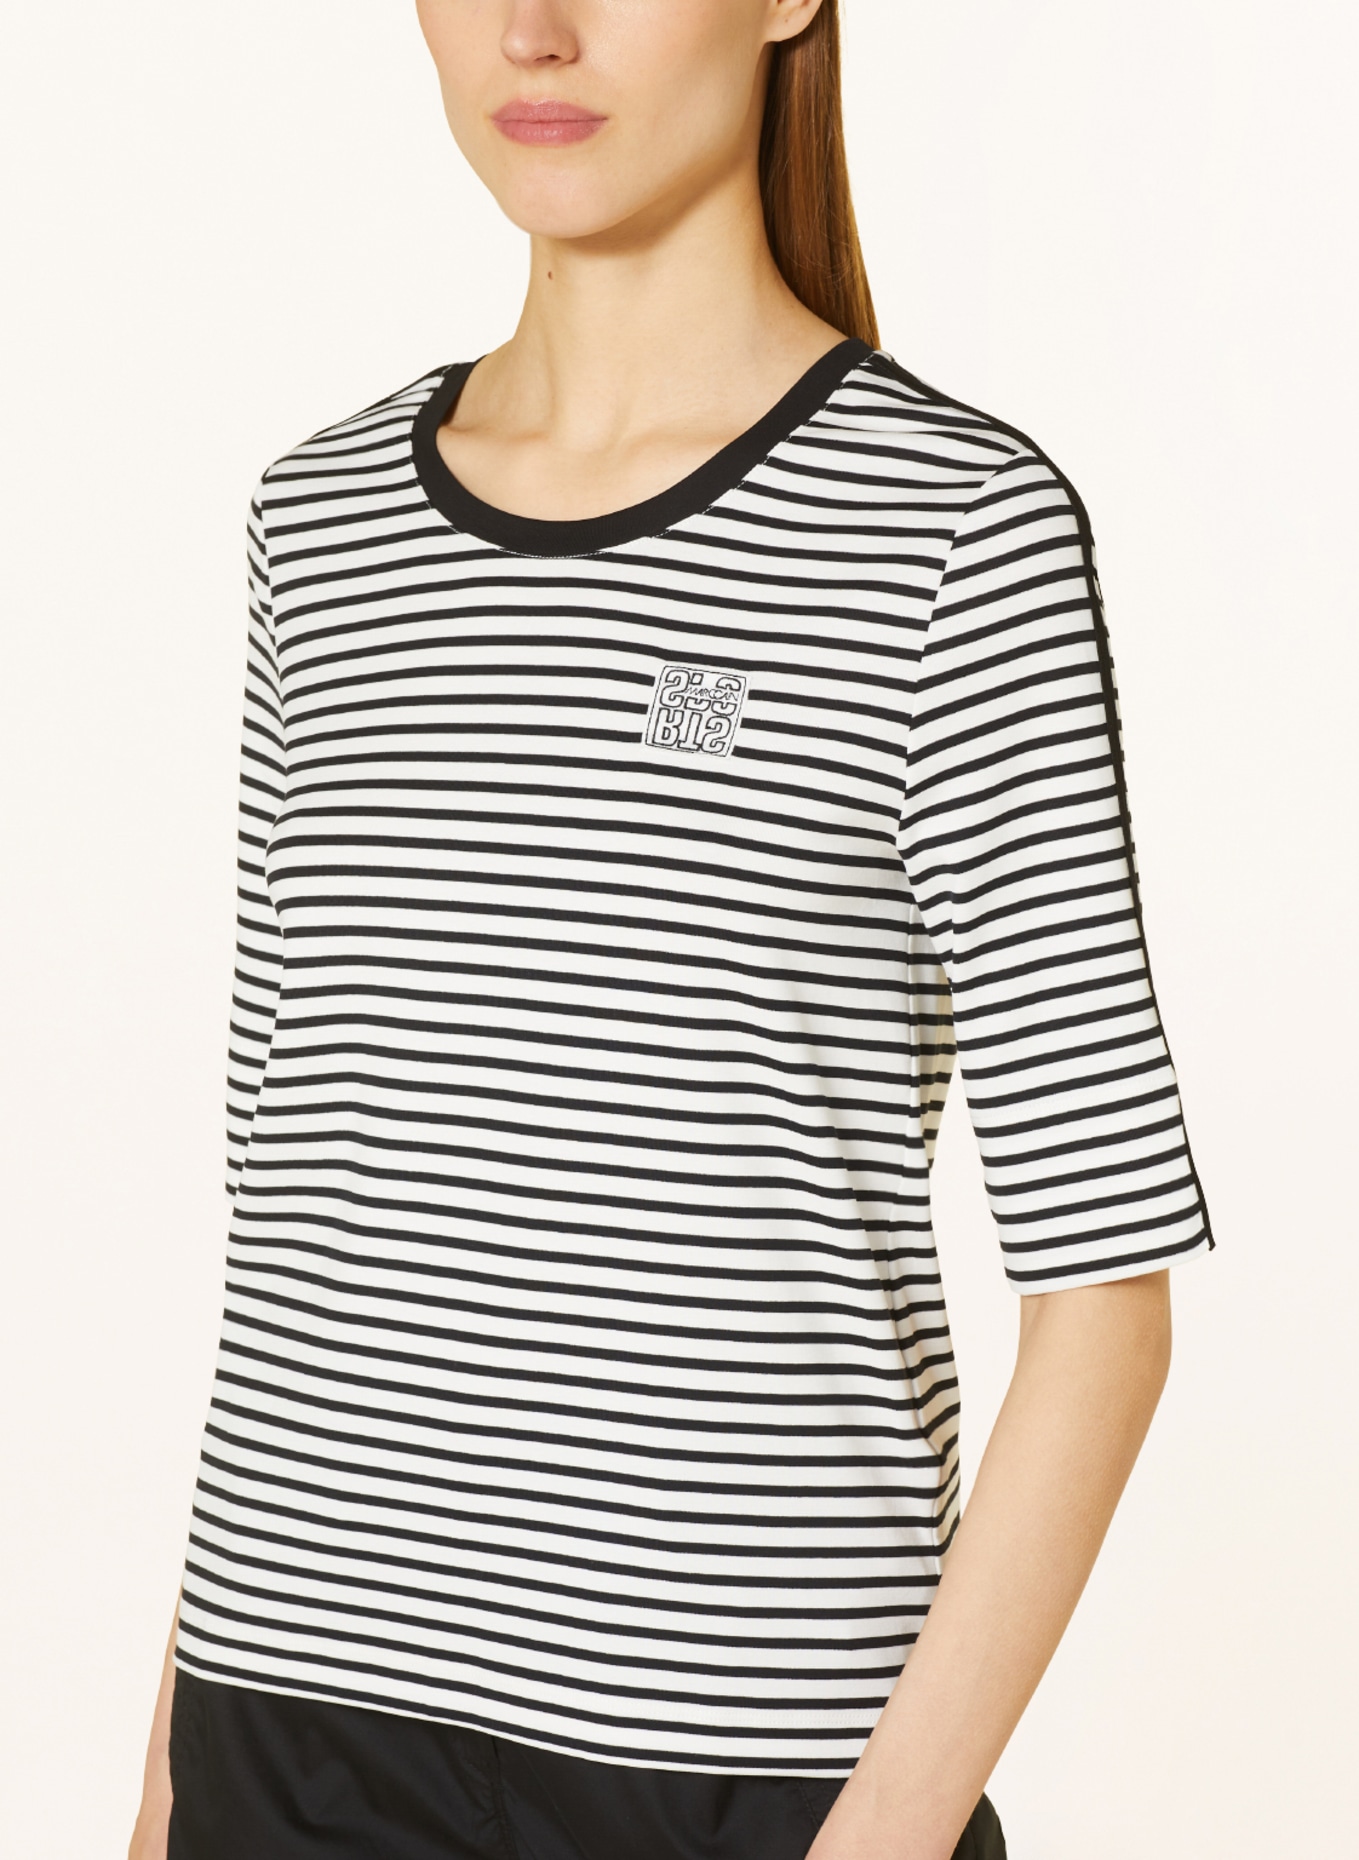 MARC CAIN Shirt mit 3/4-Arm, Farbe: 190 white and black (Bild 4)